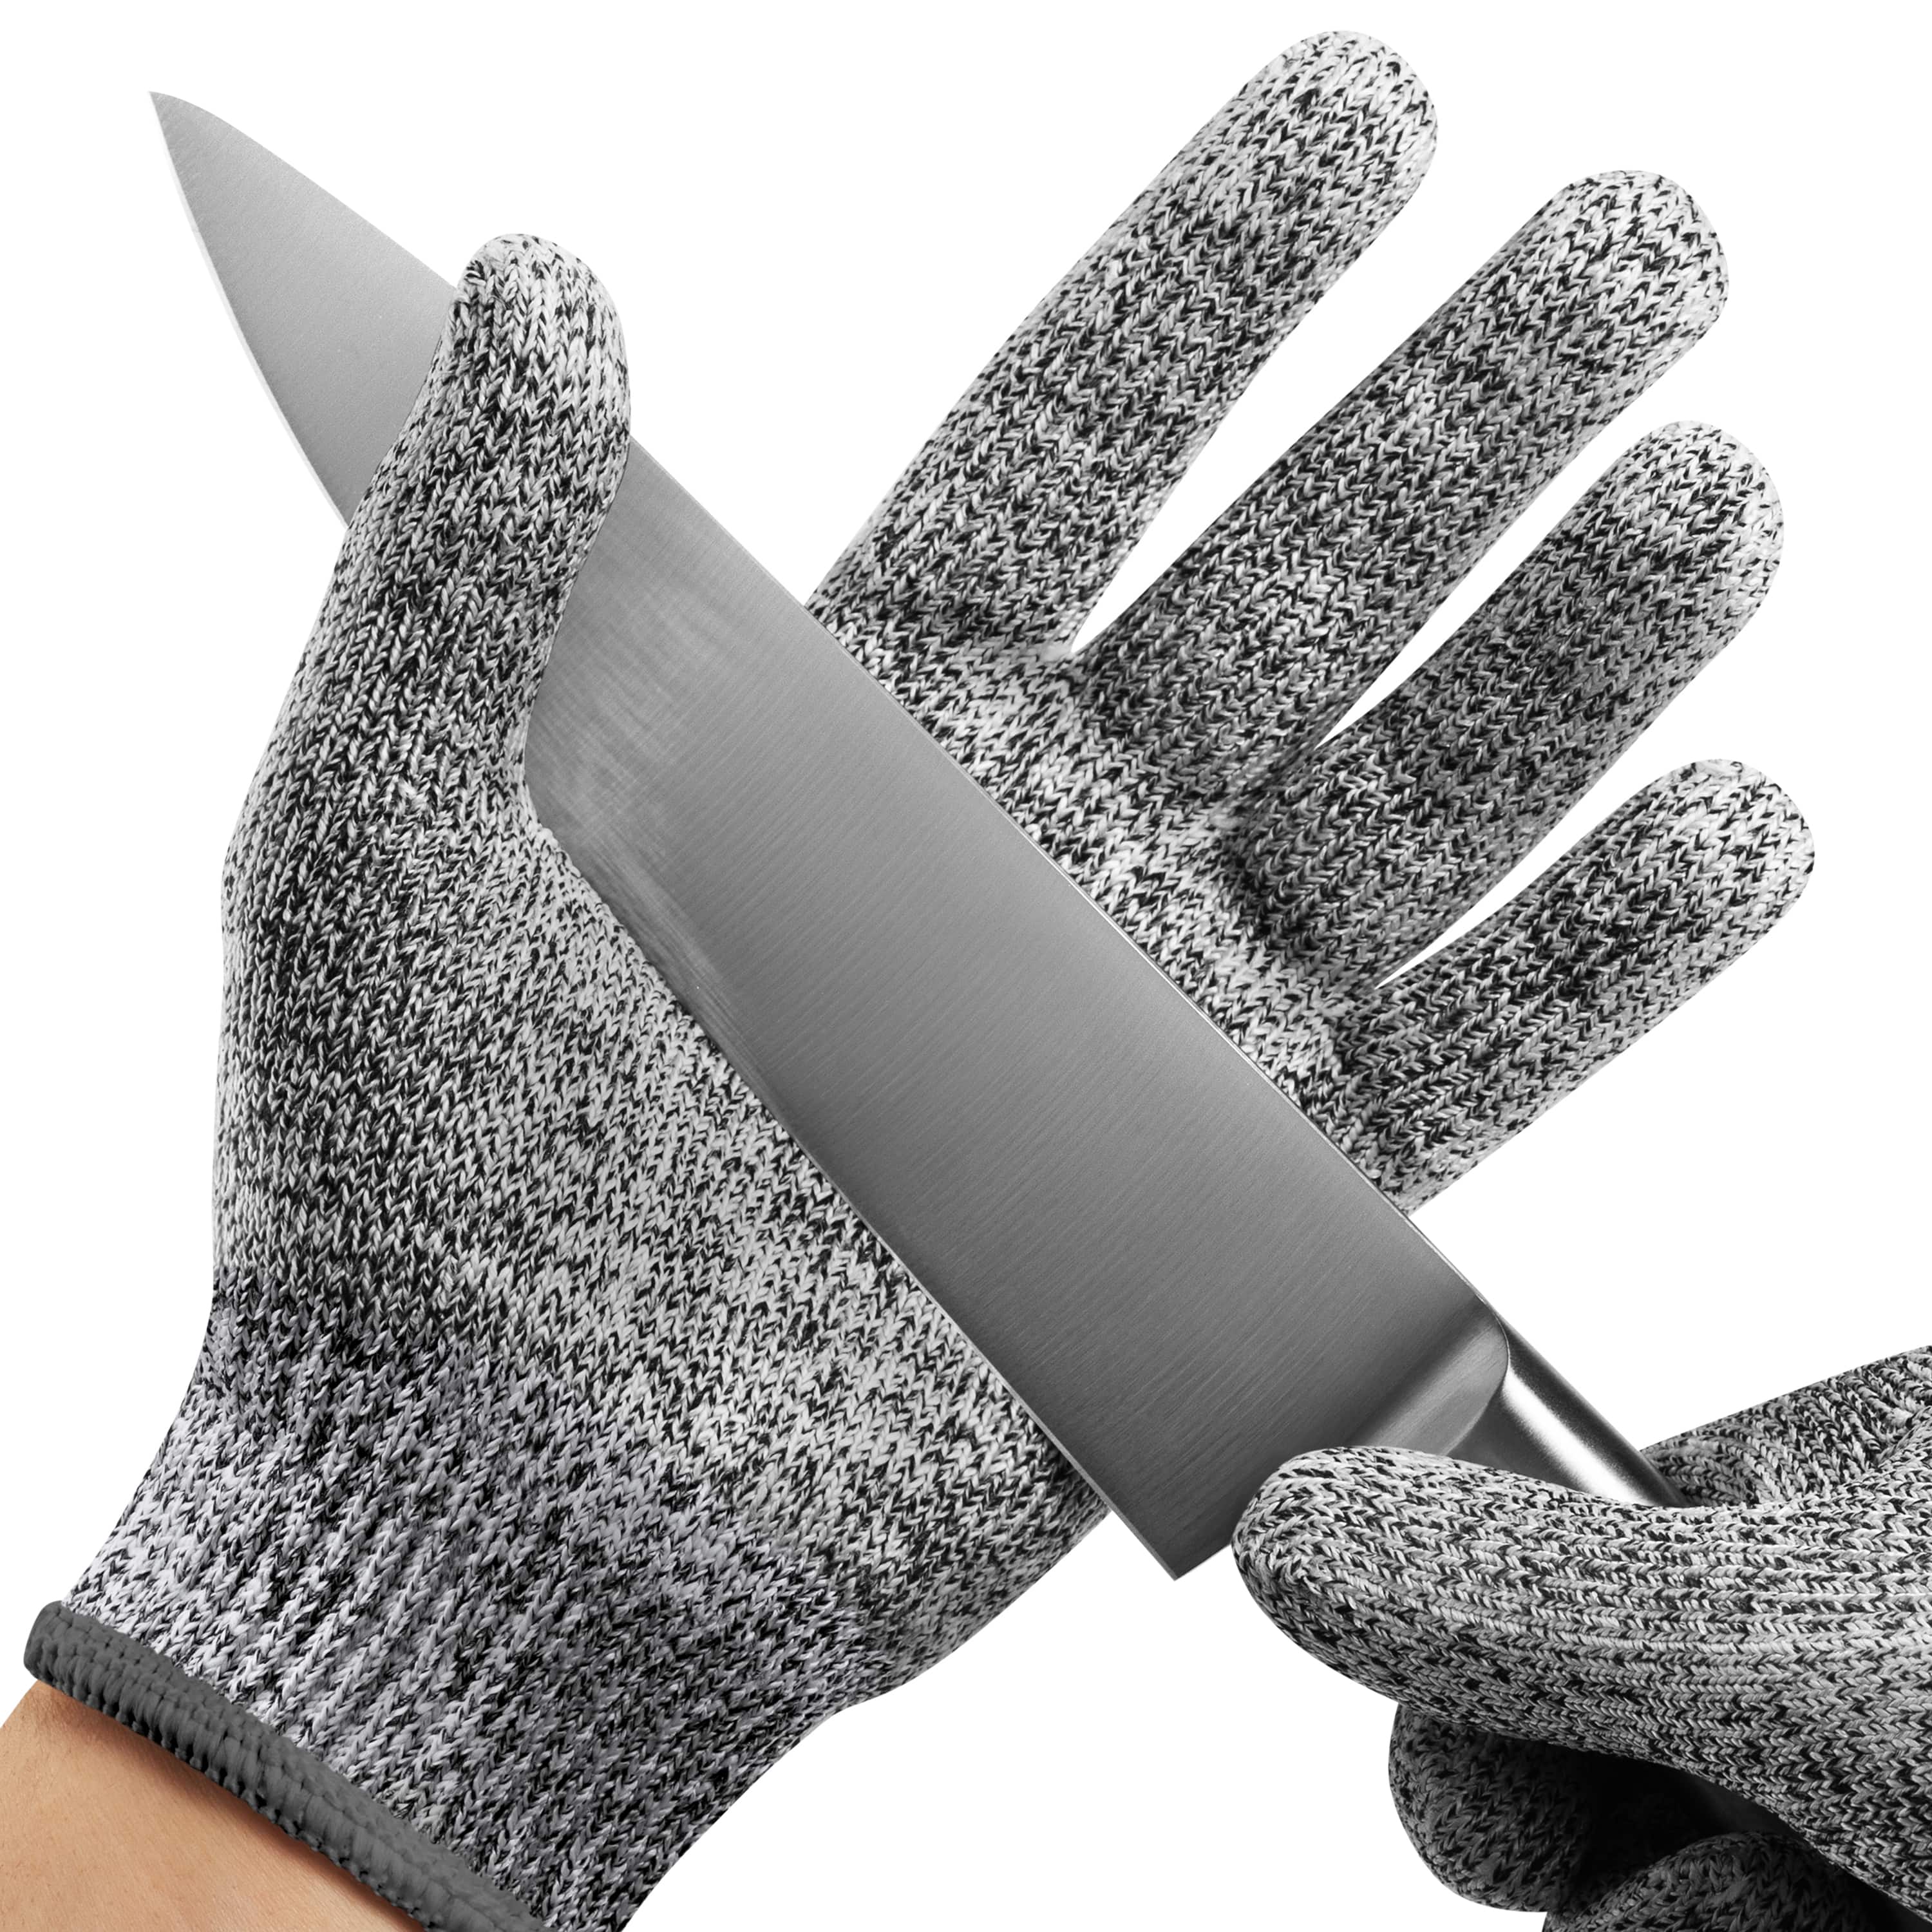 Stainless Steel Cut Resistant Gloves, Garment Cutting Machine